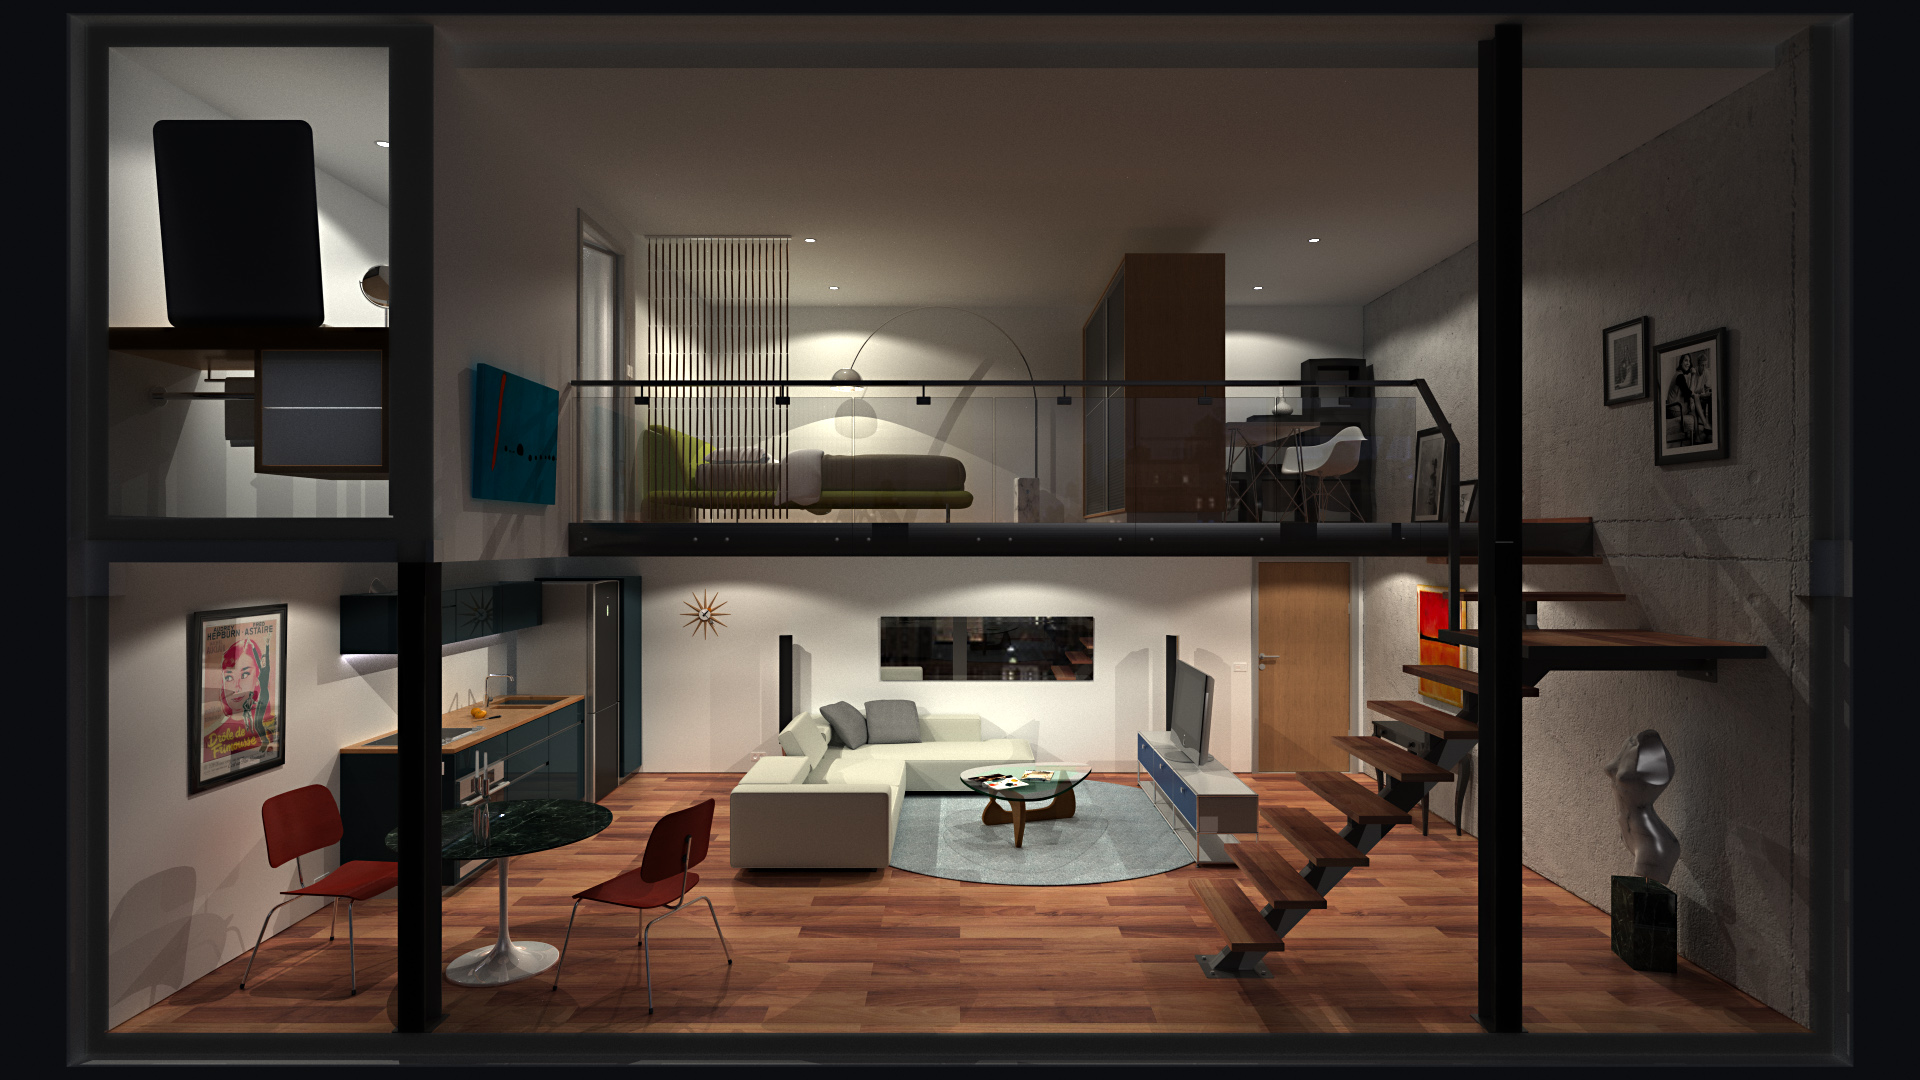 Loft Apartment 0 - HD, Night by richert on deviantART